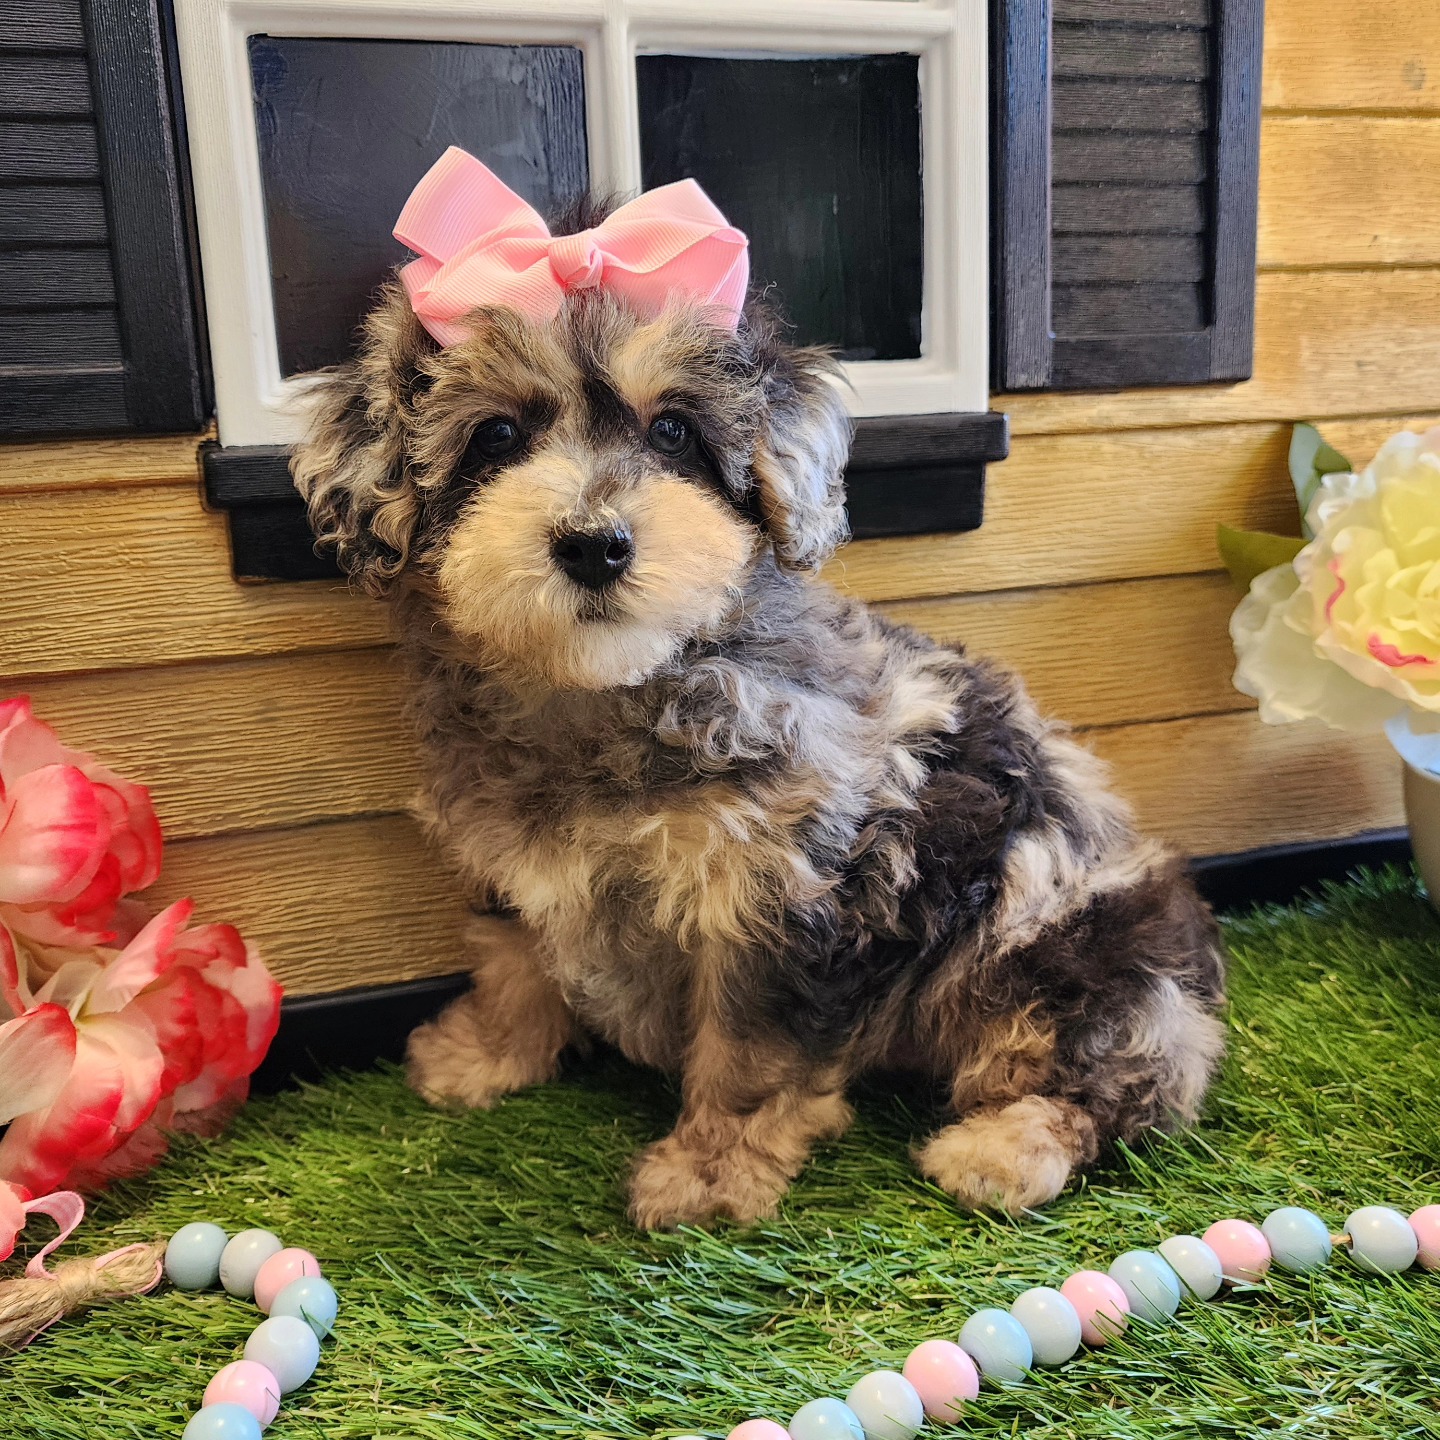 Mini Poodle – Female Puppy